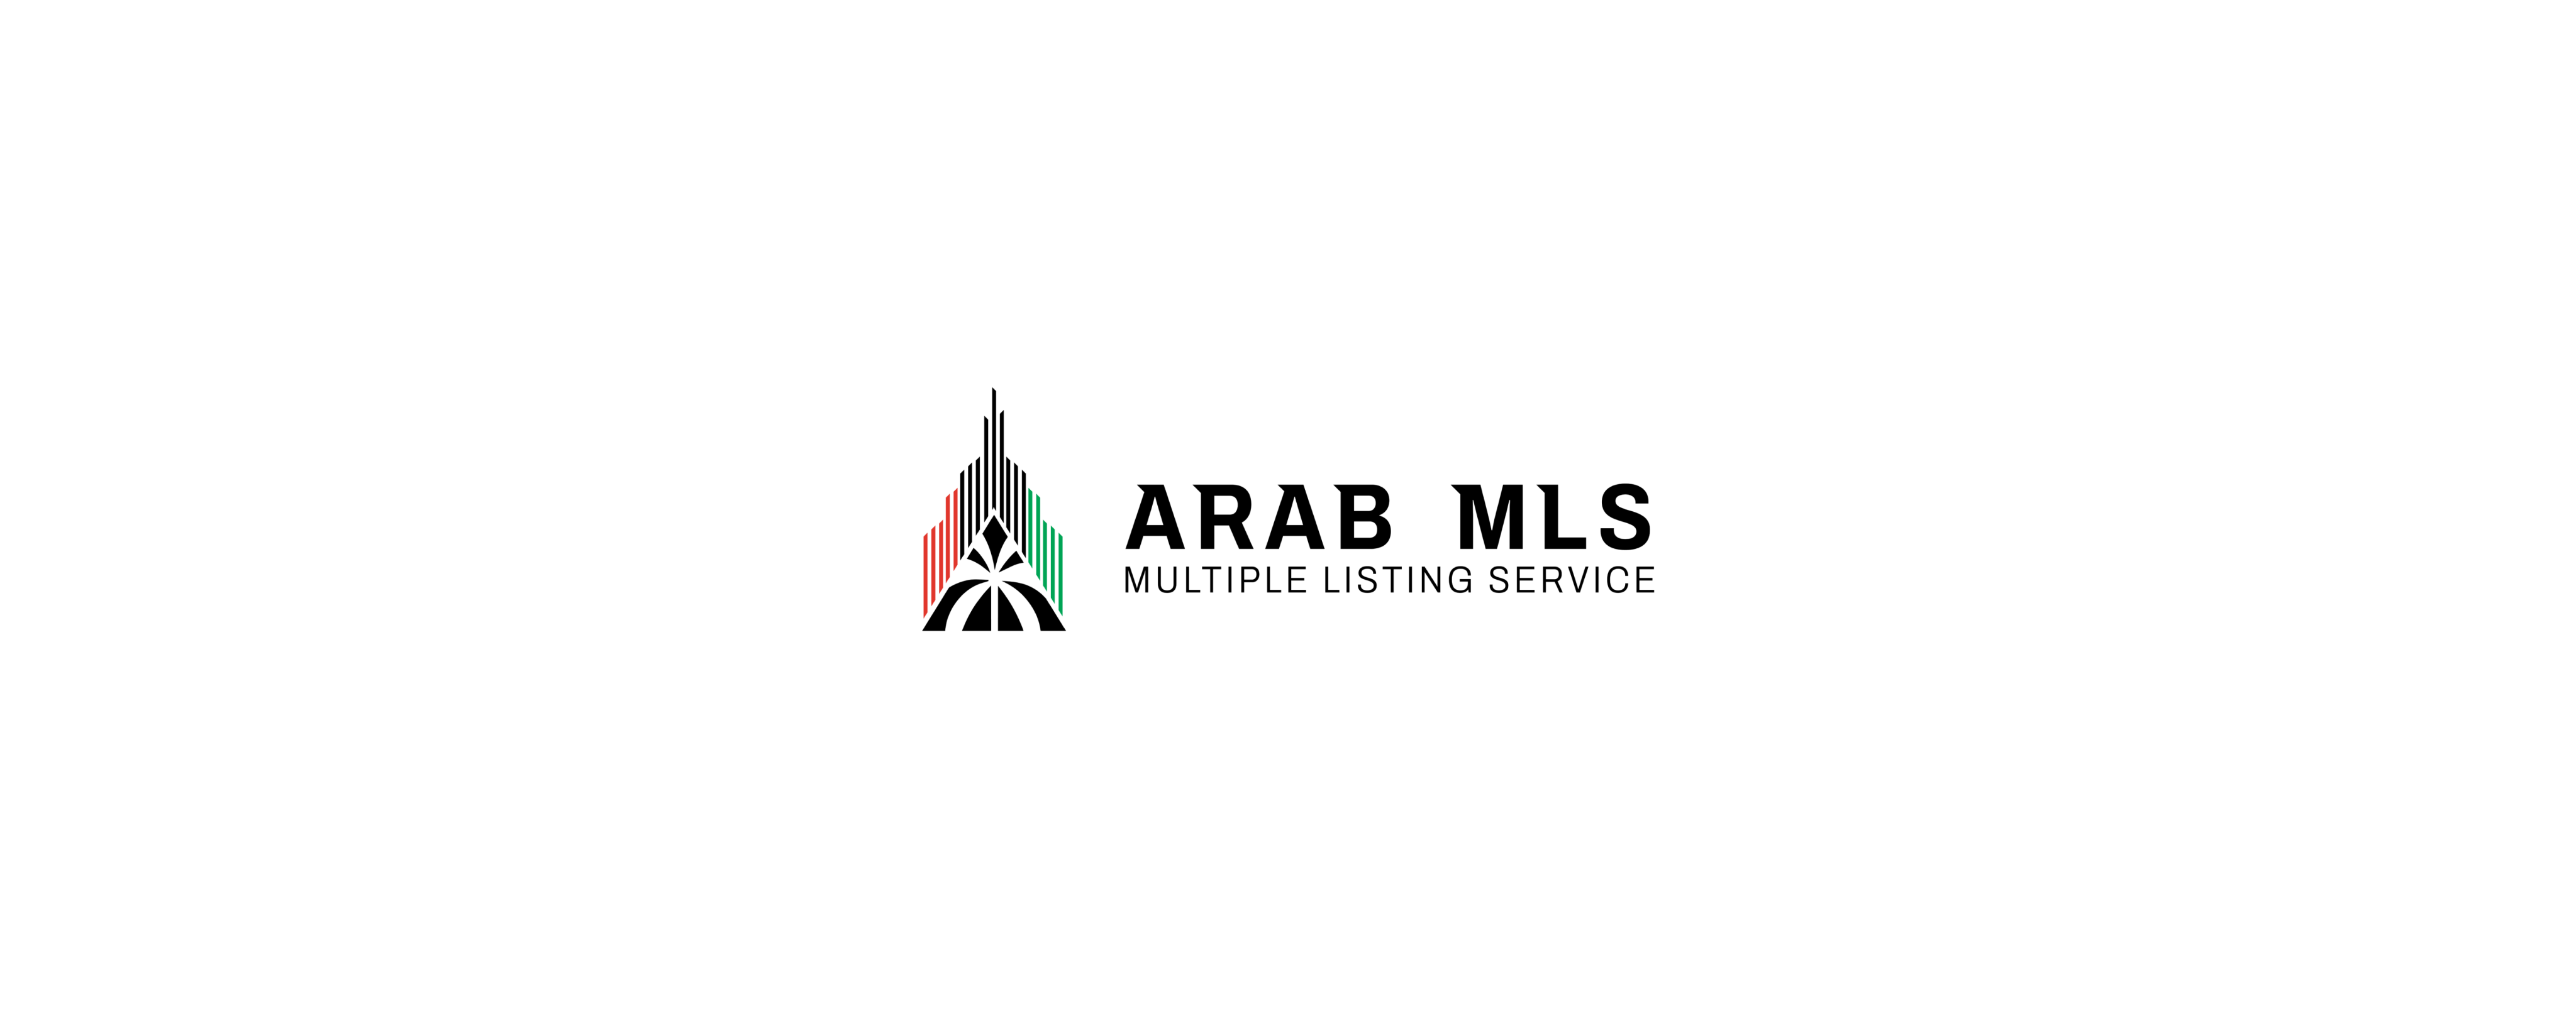 Dubai ARAB MLS LOGO